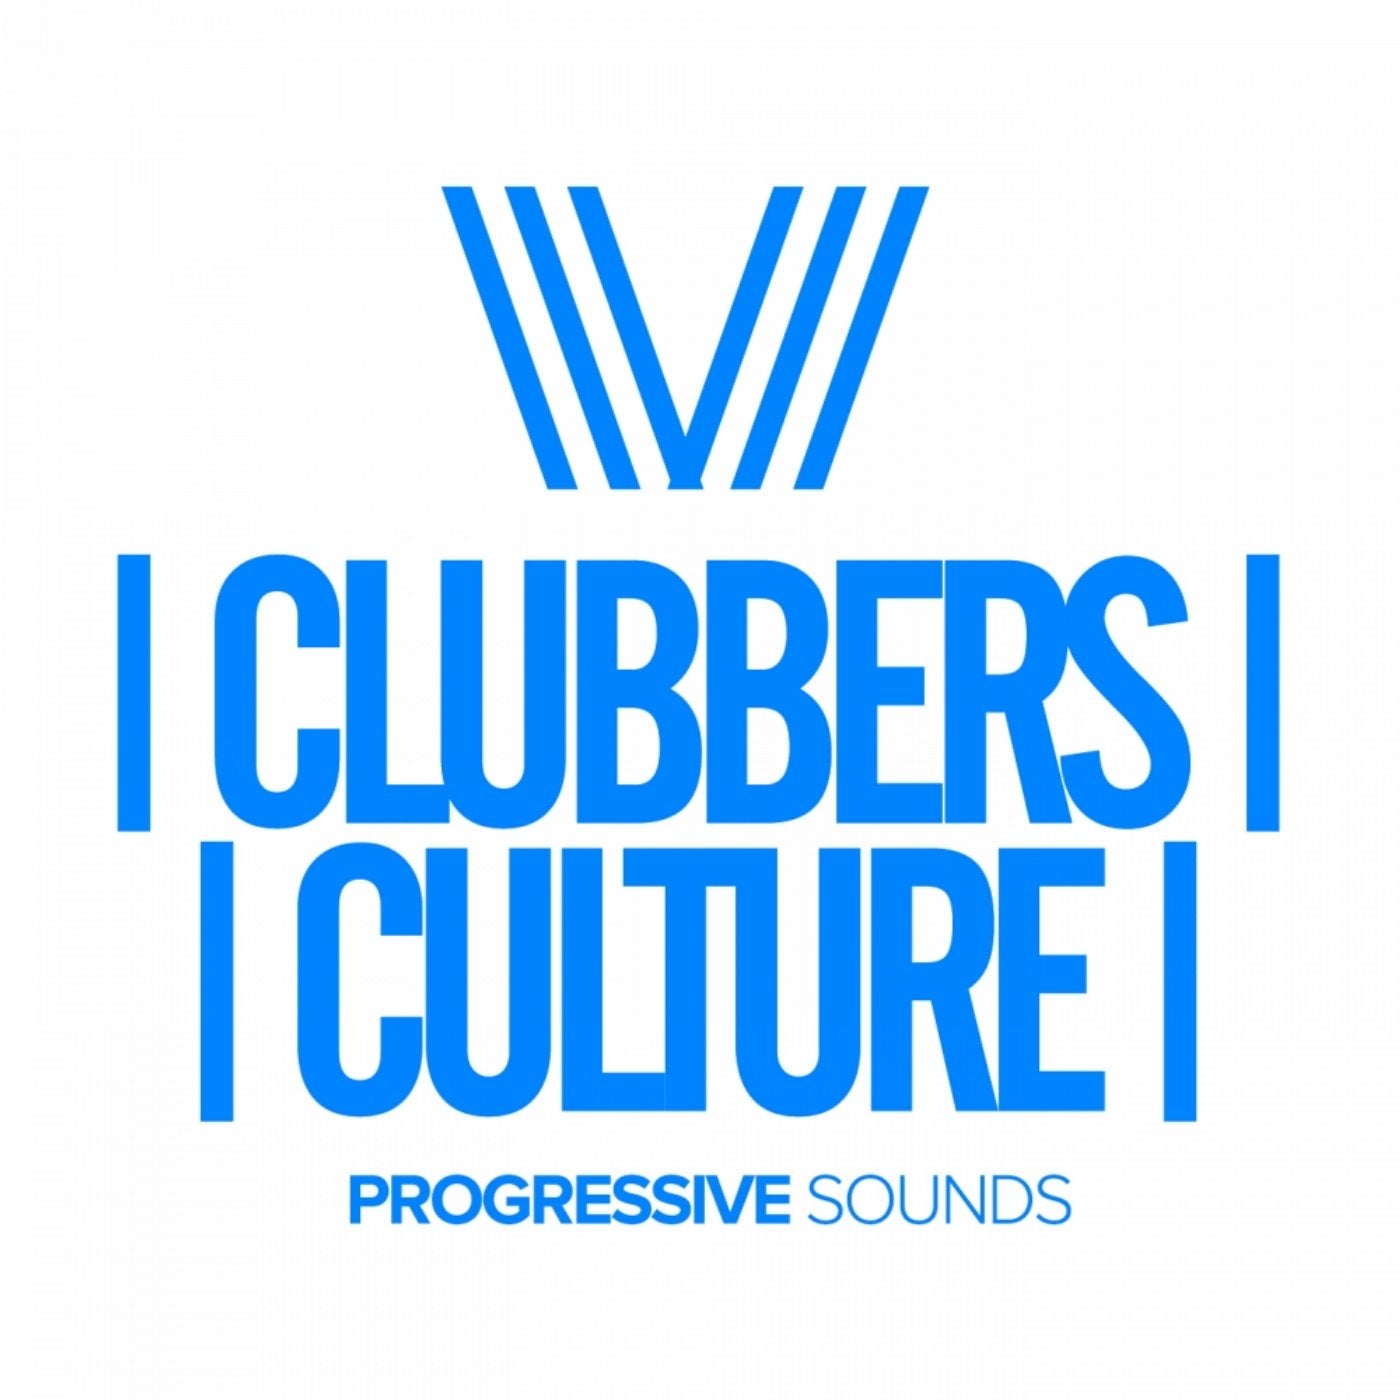 Clubbers Culture: Progressive Sounds